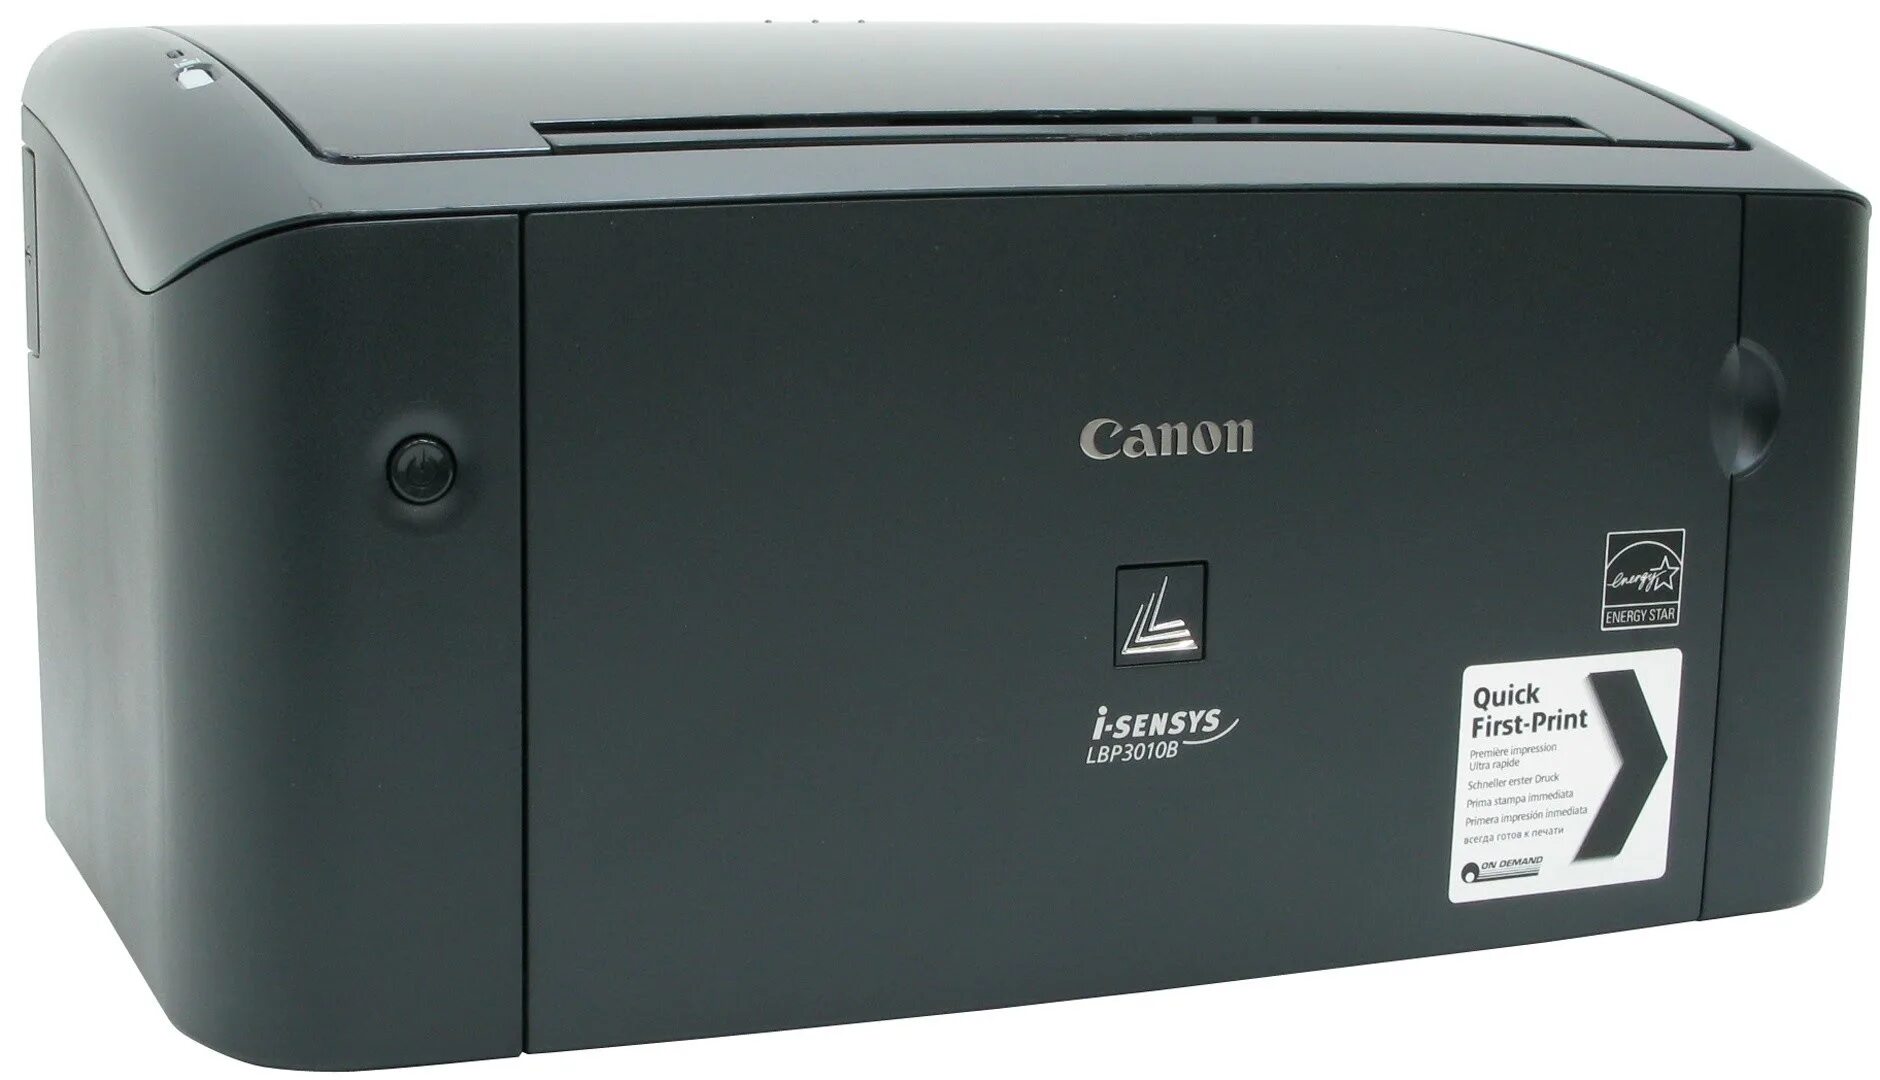 Canon принтер драйвера windows 10. Canon i-SENSYS lbp3010. Лазерный принтер Canon LBP 3010. Принтер Canon lbp3010b. Canon LBP I-SENSYS 3010/3010b.